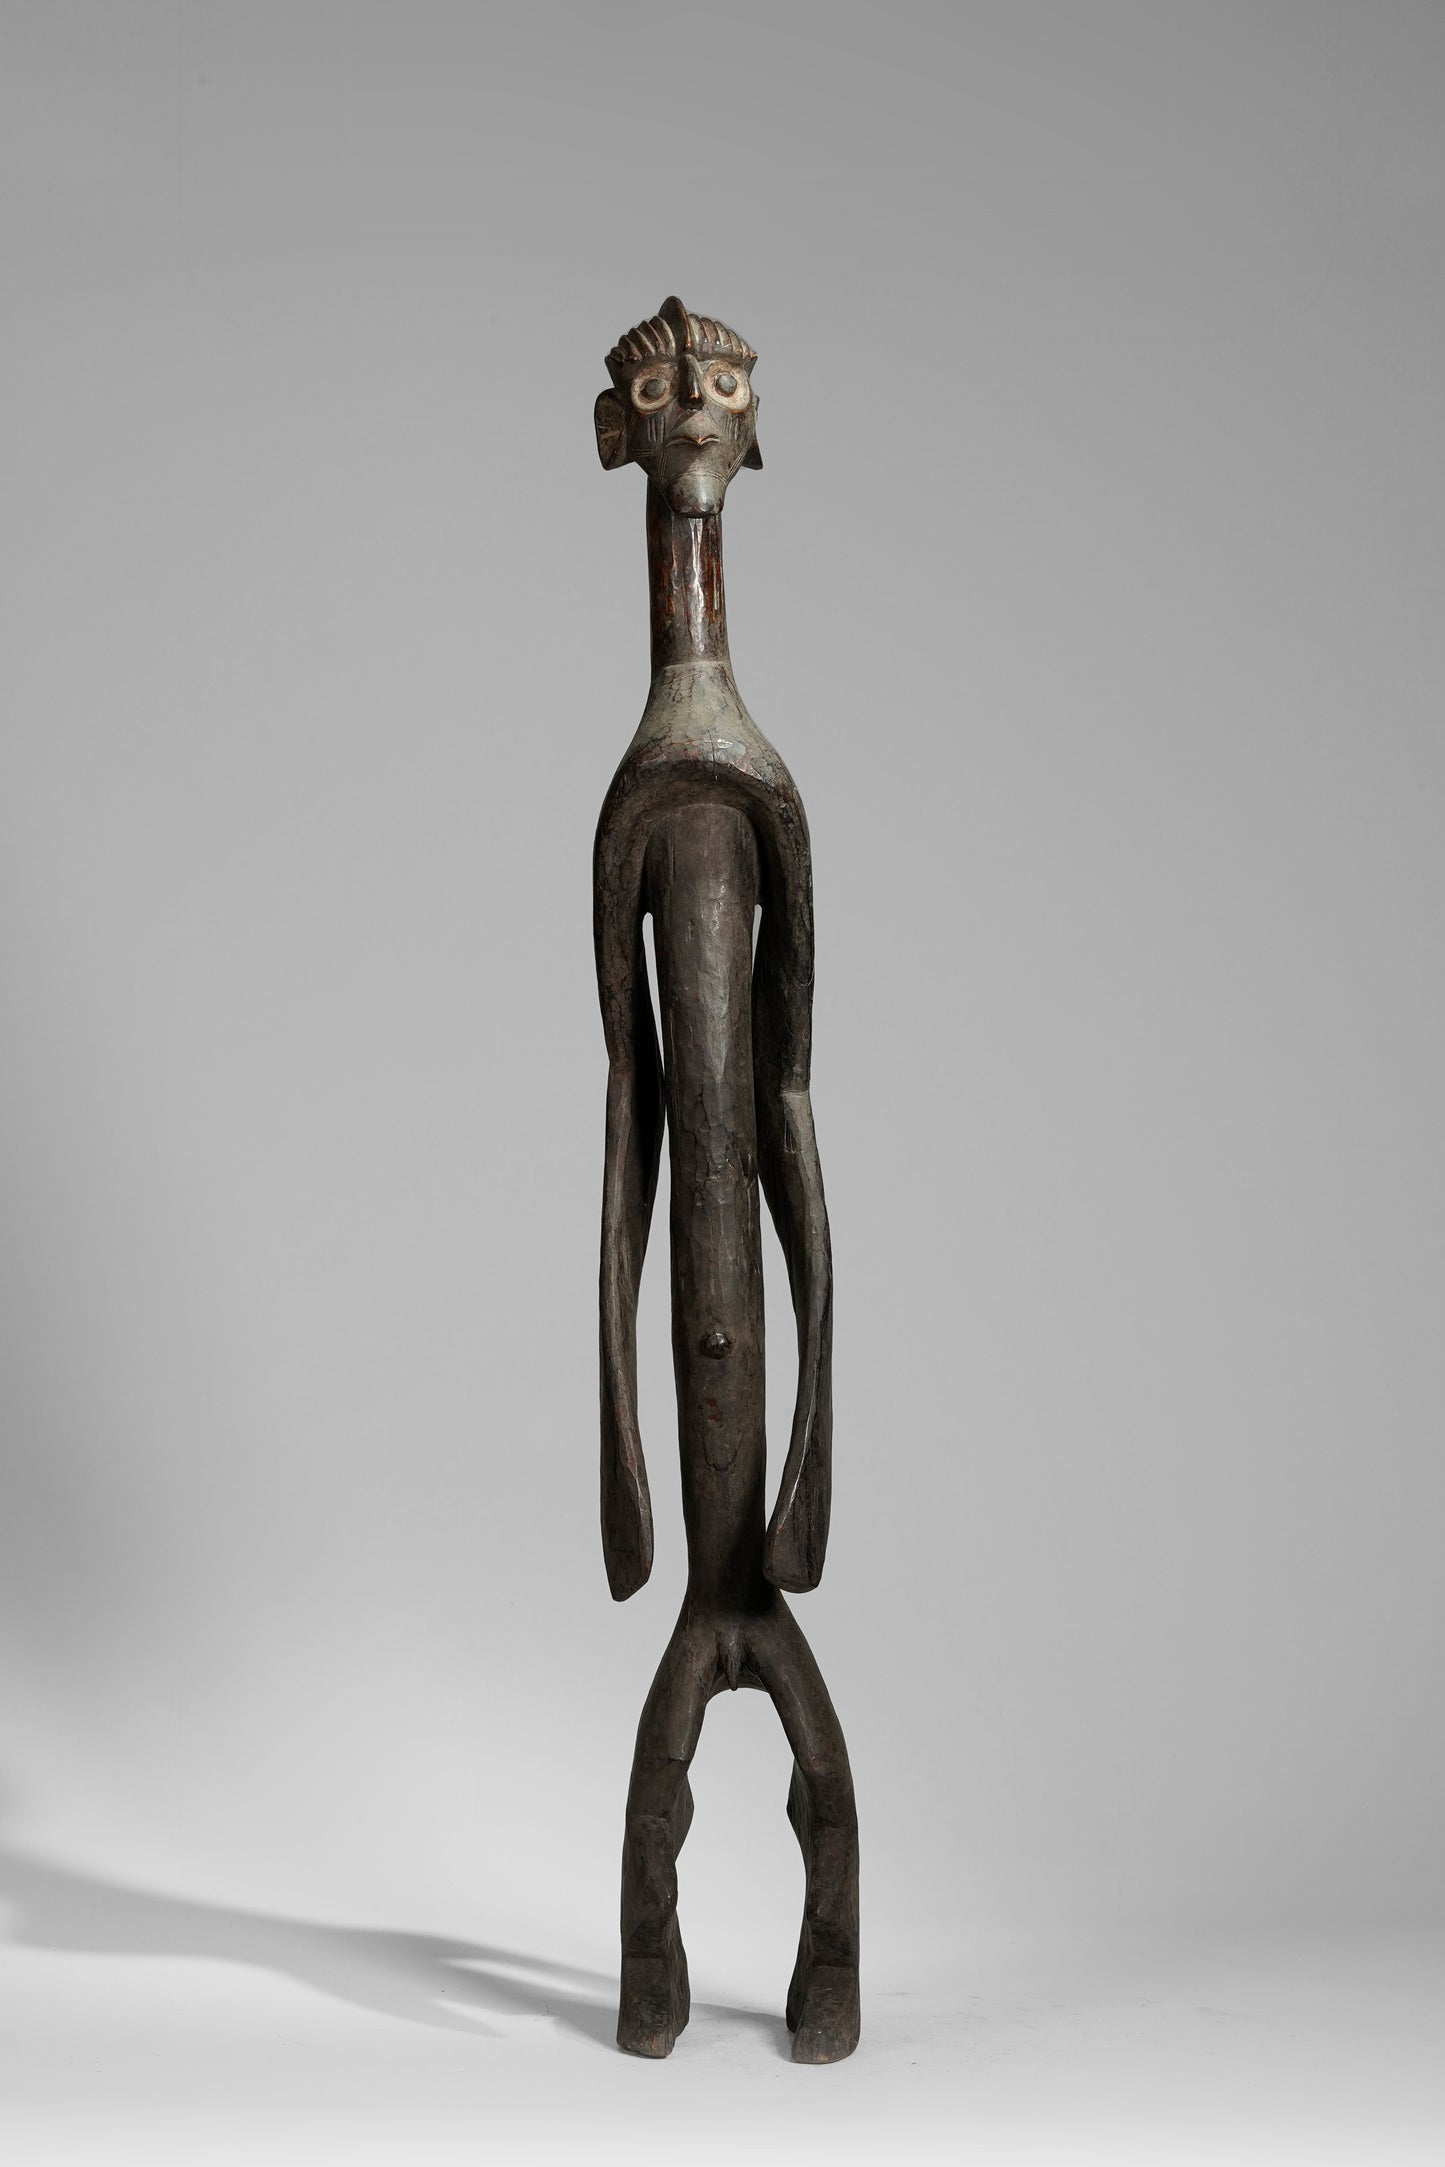 A Mumuye statue